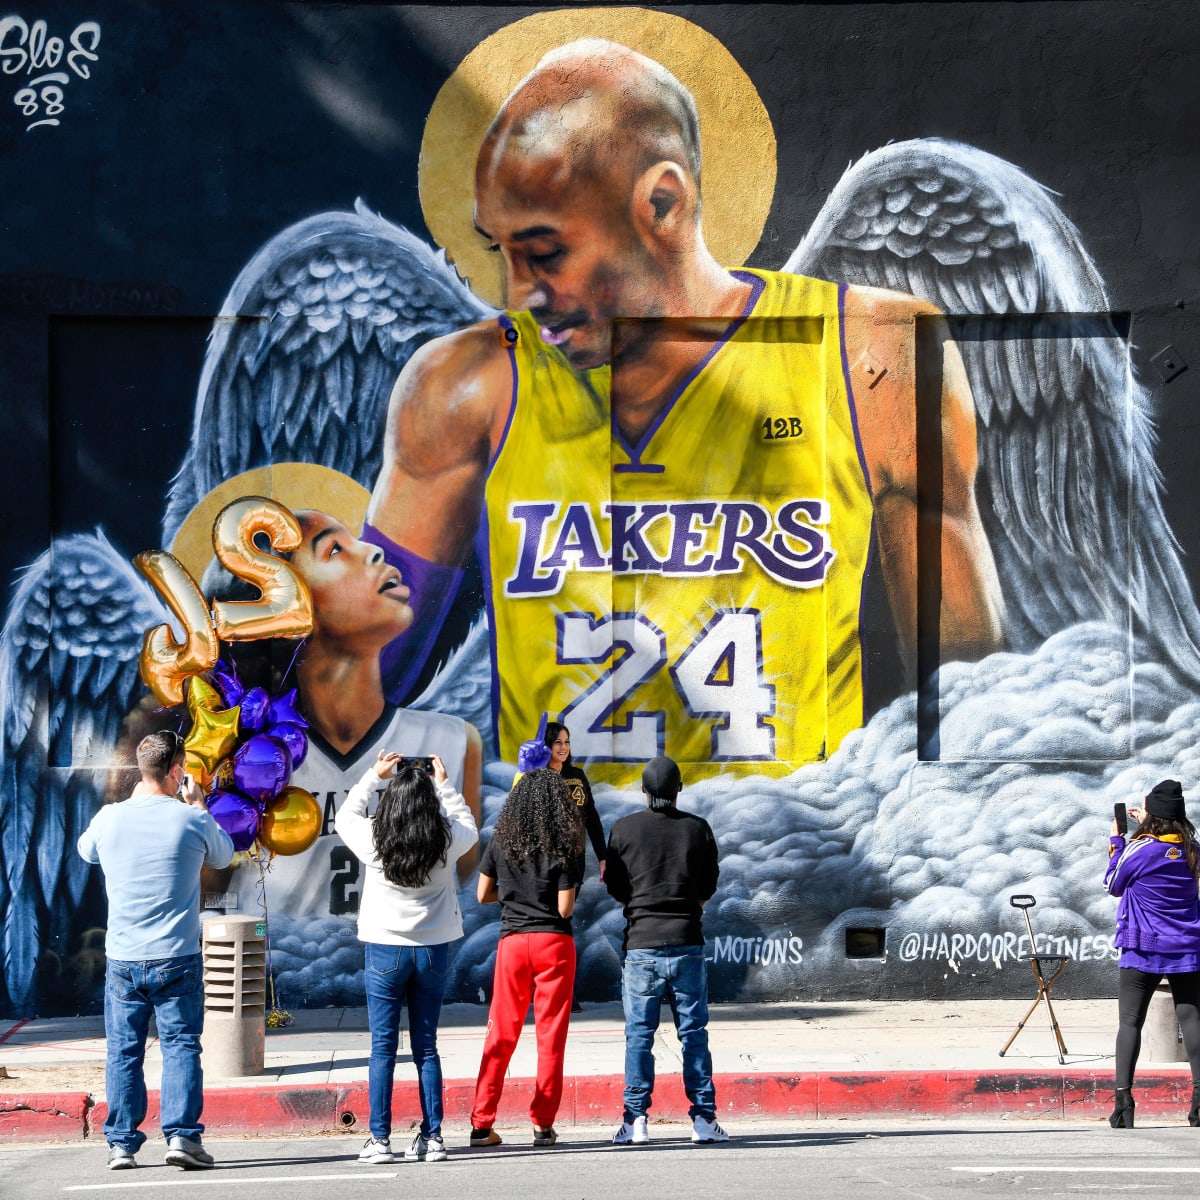 LA Lakers plan Kobe Bryant 'Black Mamba' jersey tribute in NBA